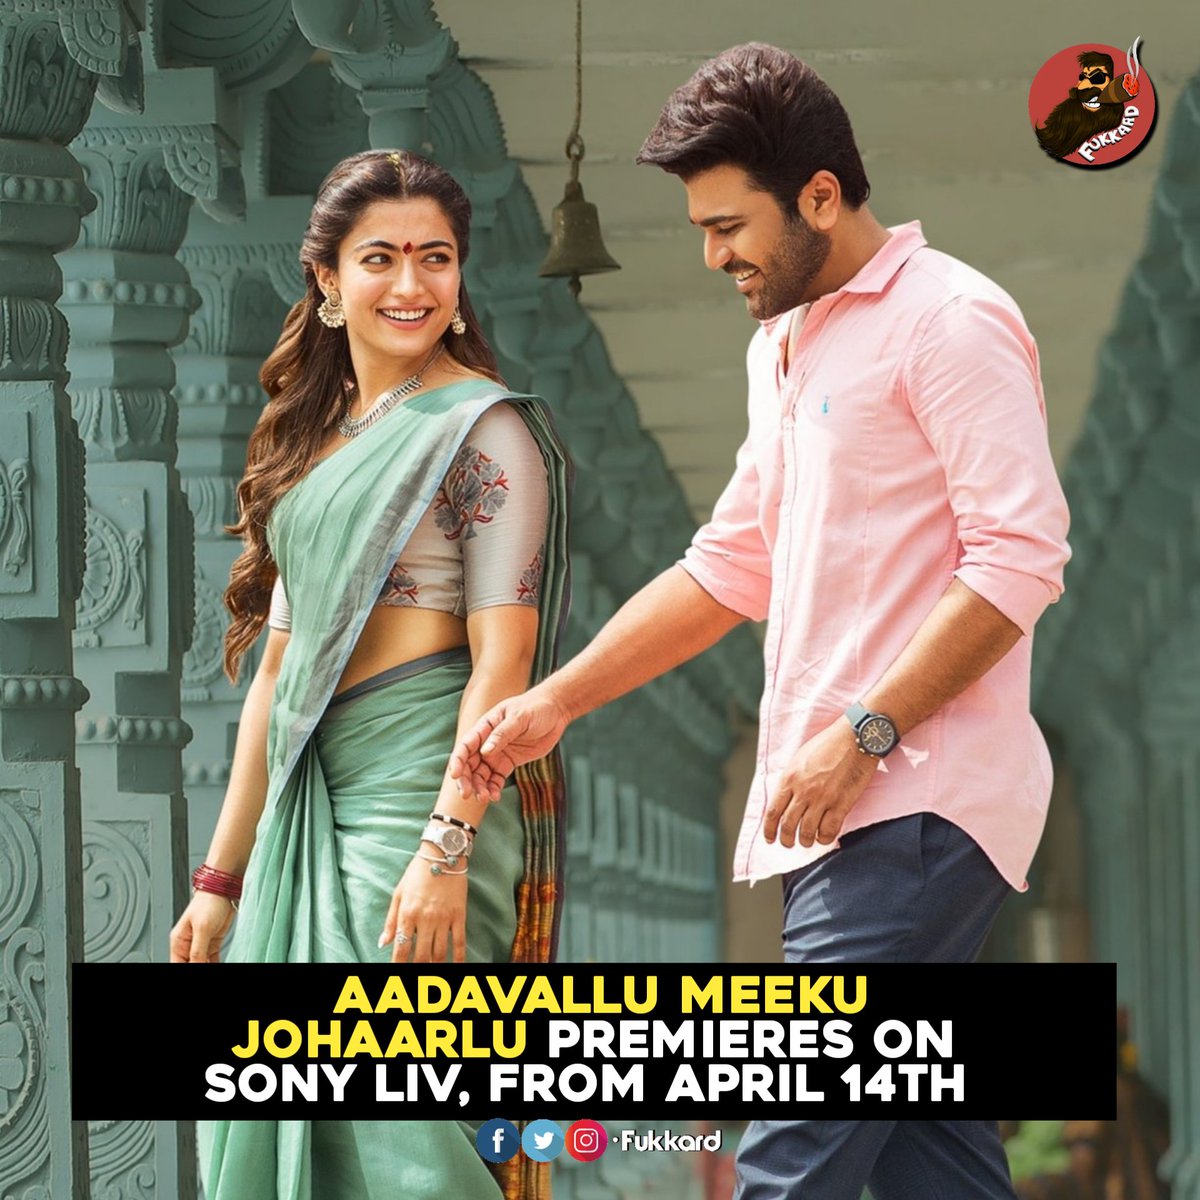 #AadavalluMeekuJohaarlu on Sony live from April 14th.